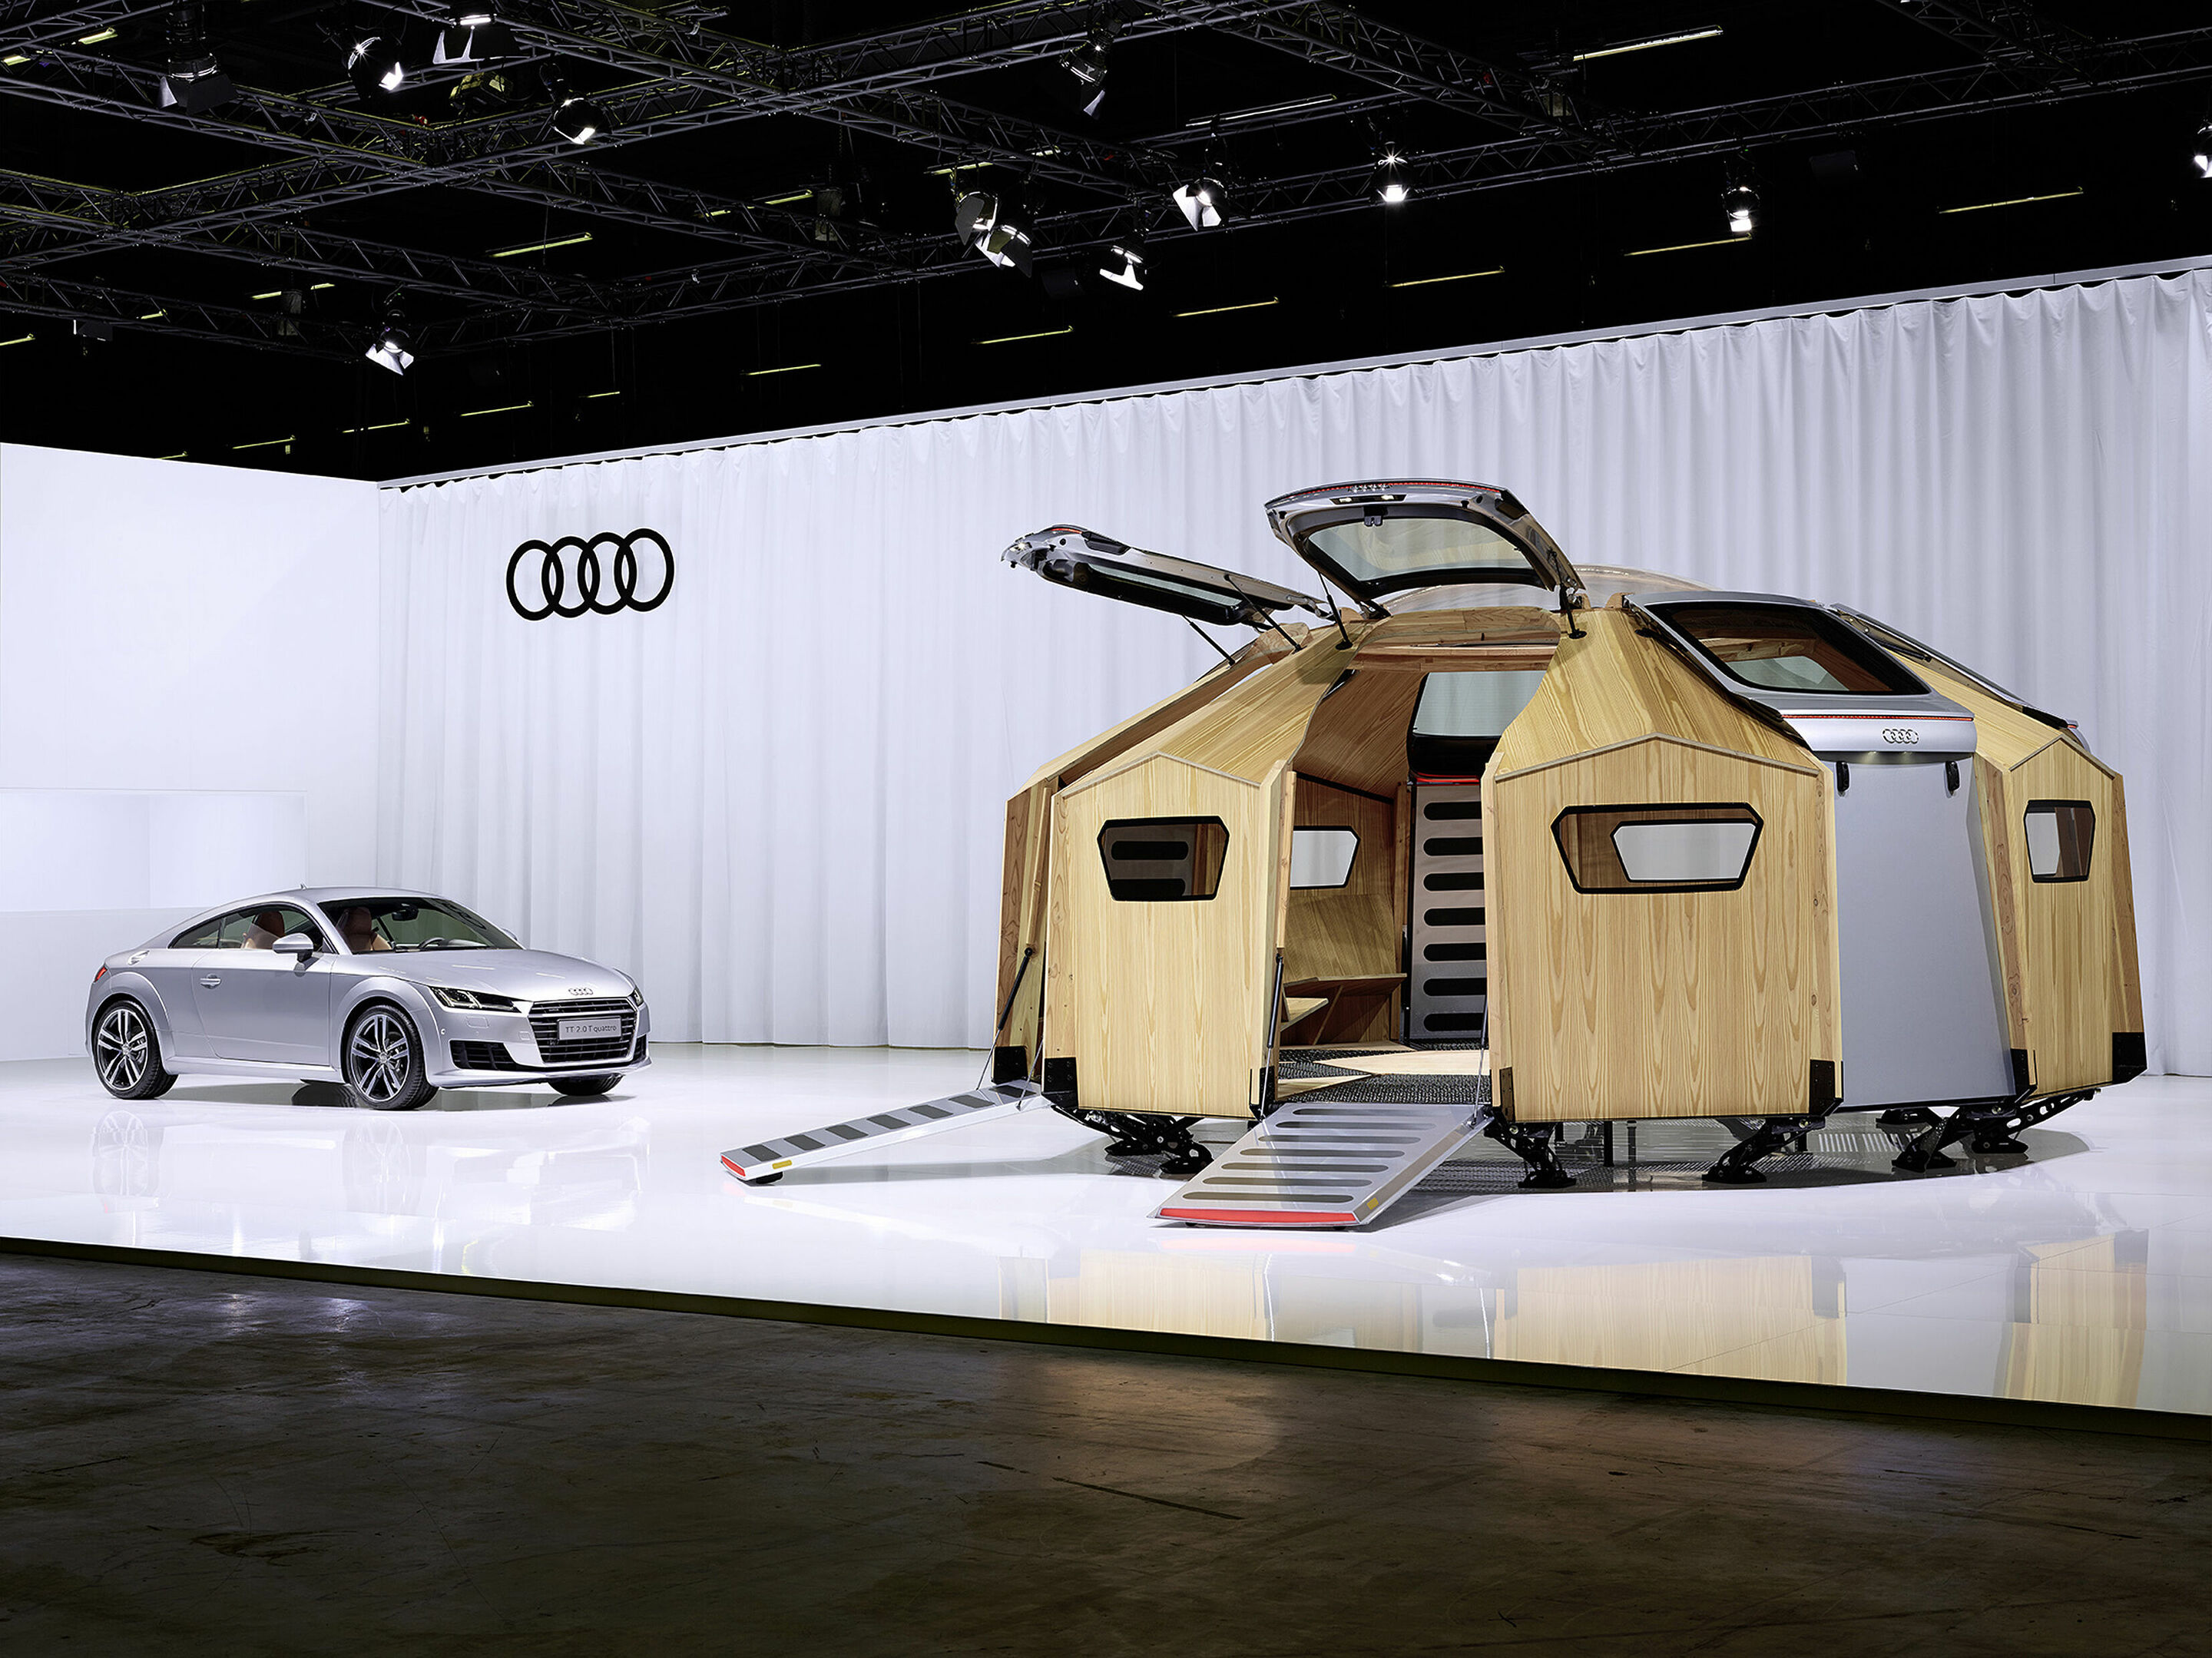 Audi at Design Miami/Basel 2014: Konstantin Grcic dresigns the "TT Pavilion"